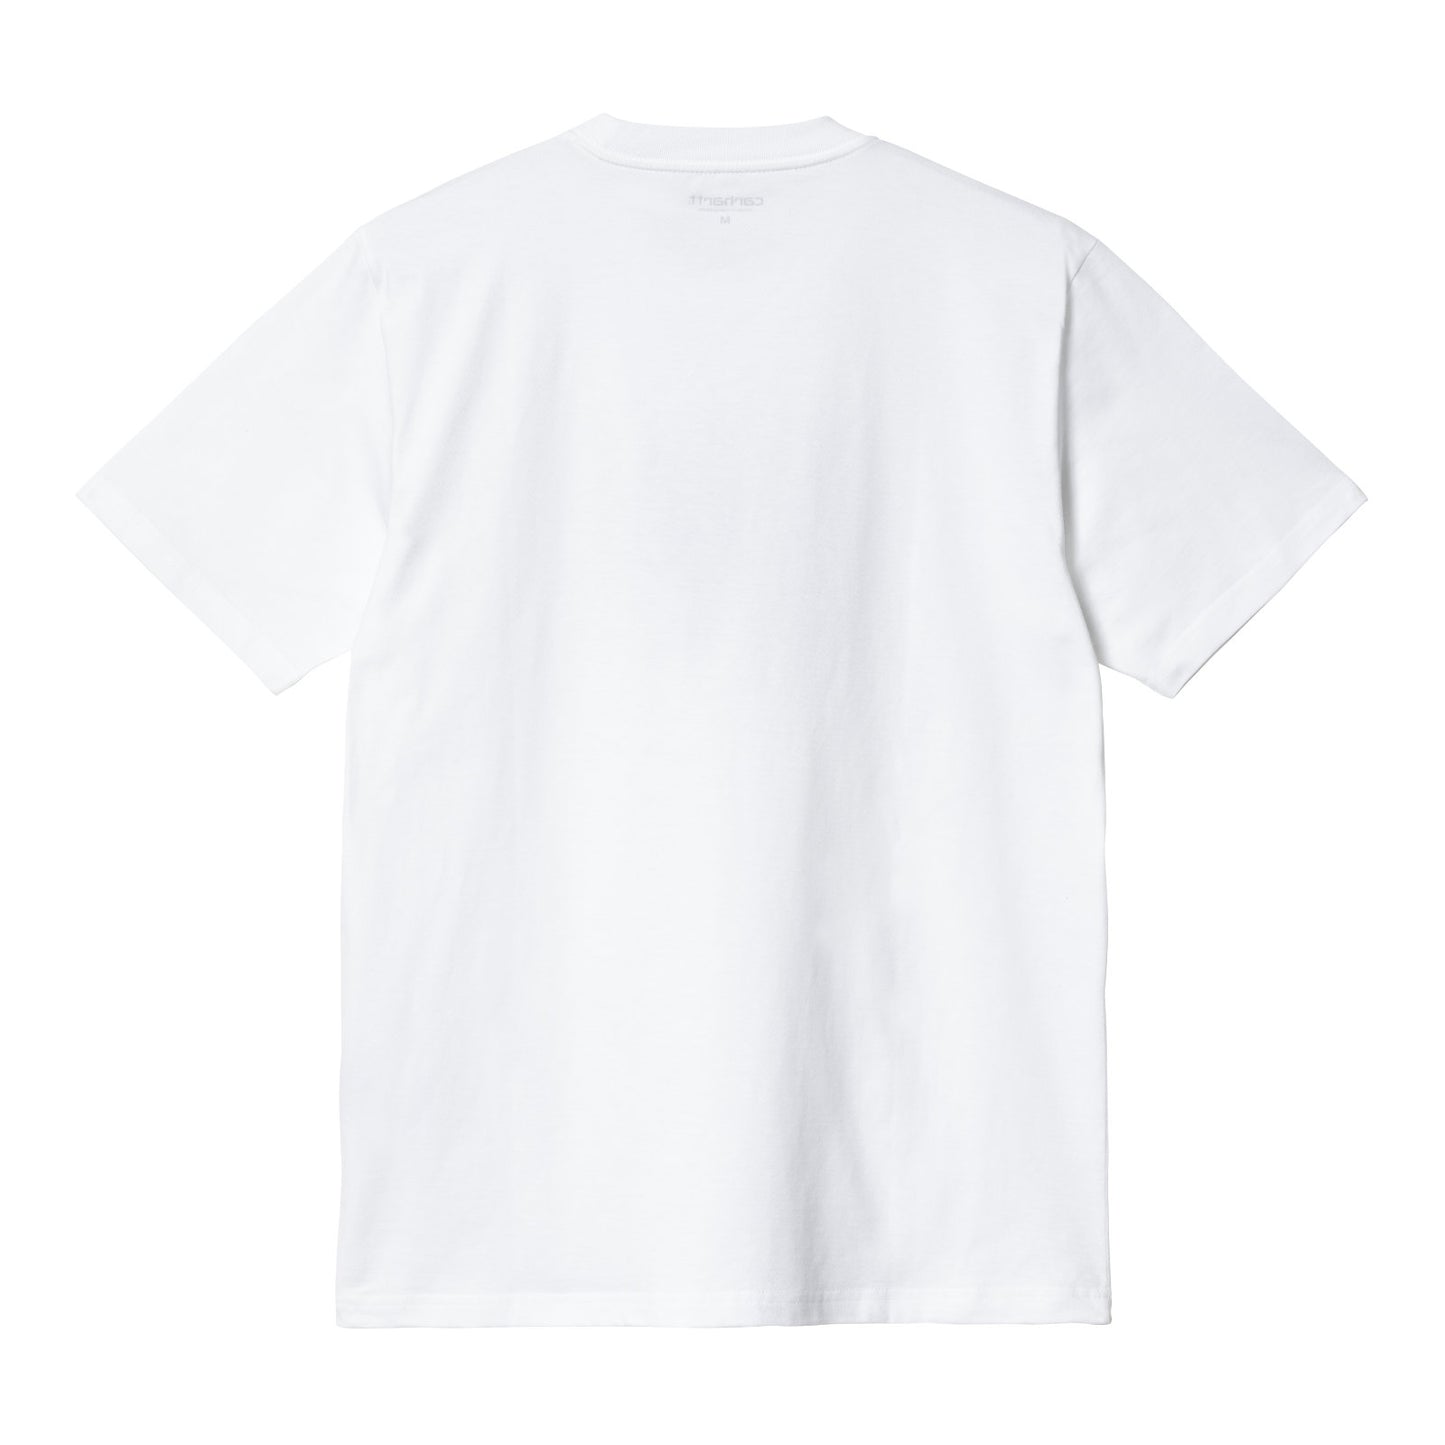 Carhartt WIP Nice Trip T-Shirt White. Foto de trás.